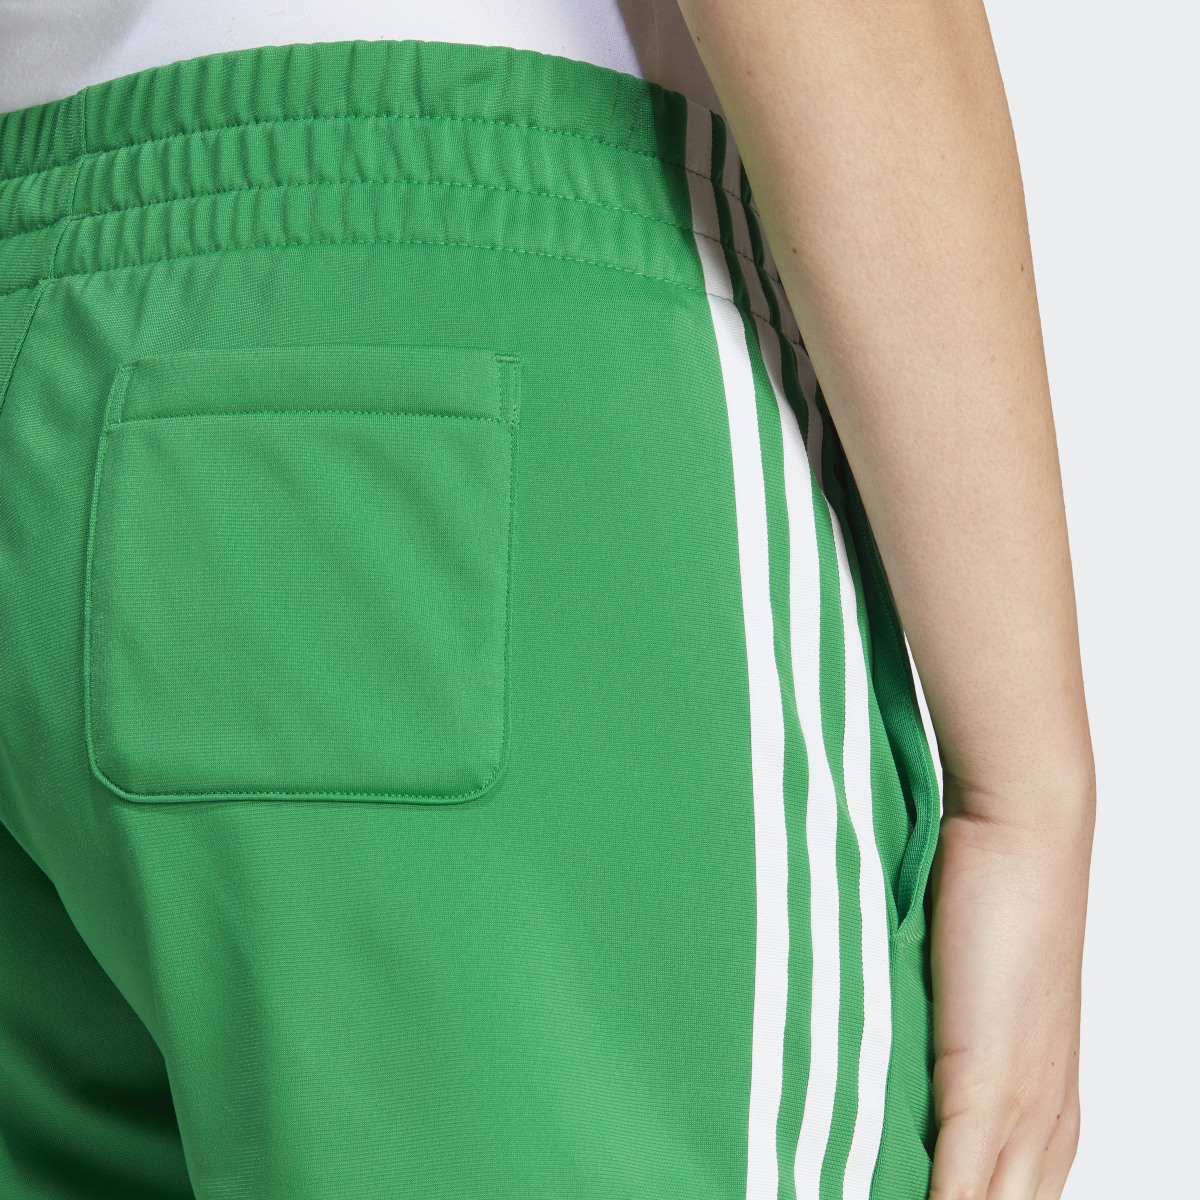 Adidas 3-Stripes Shorts. 6